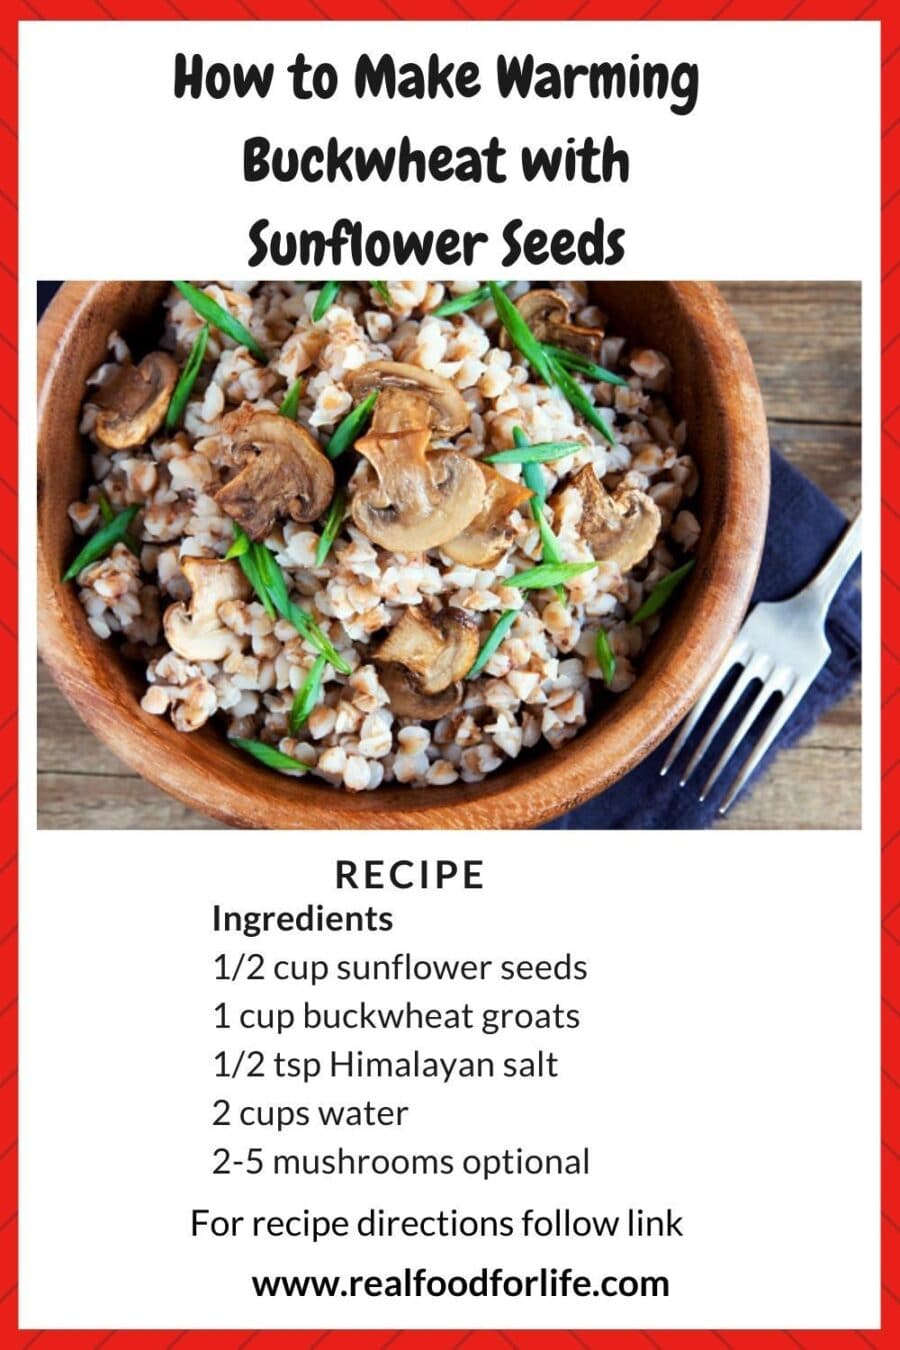 Buckwheat with Sunflower Seeds